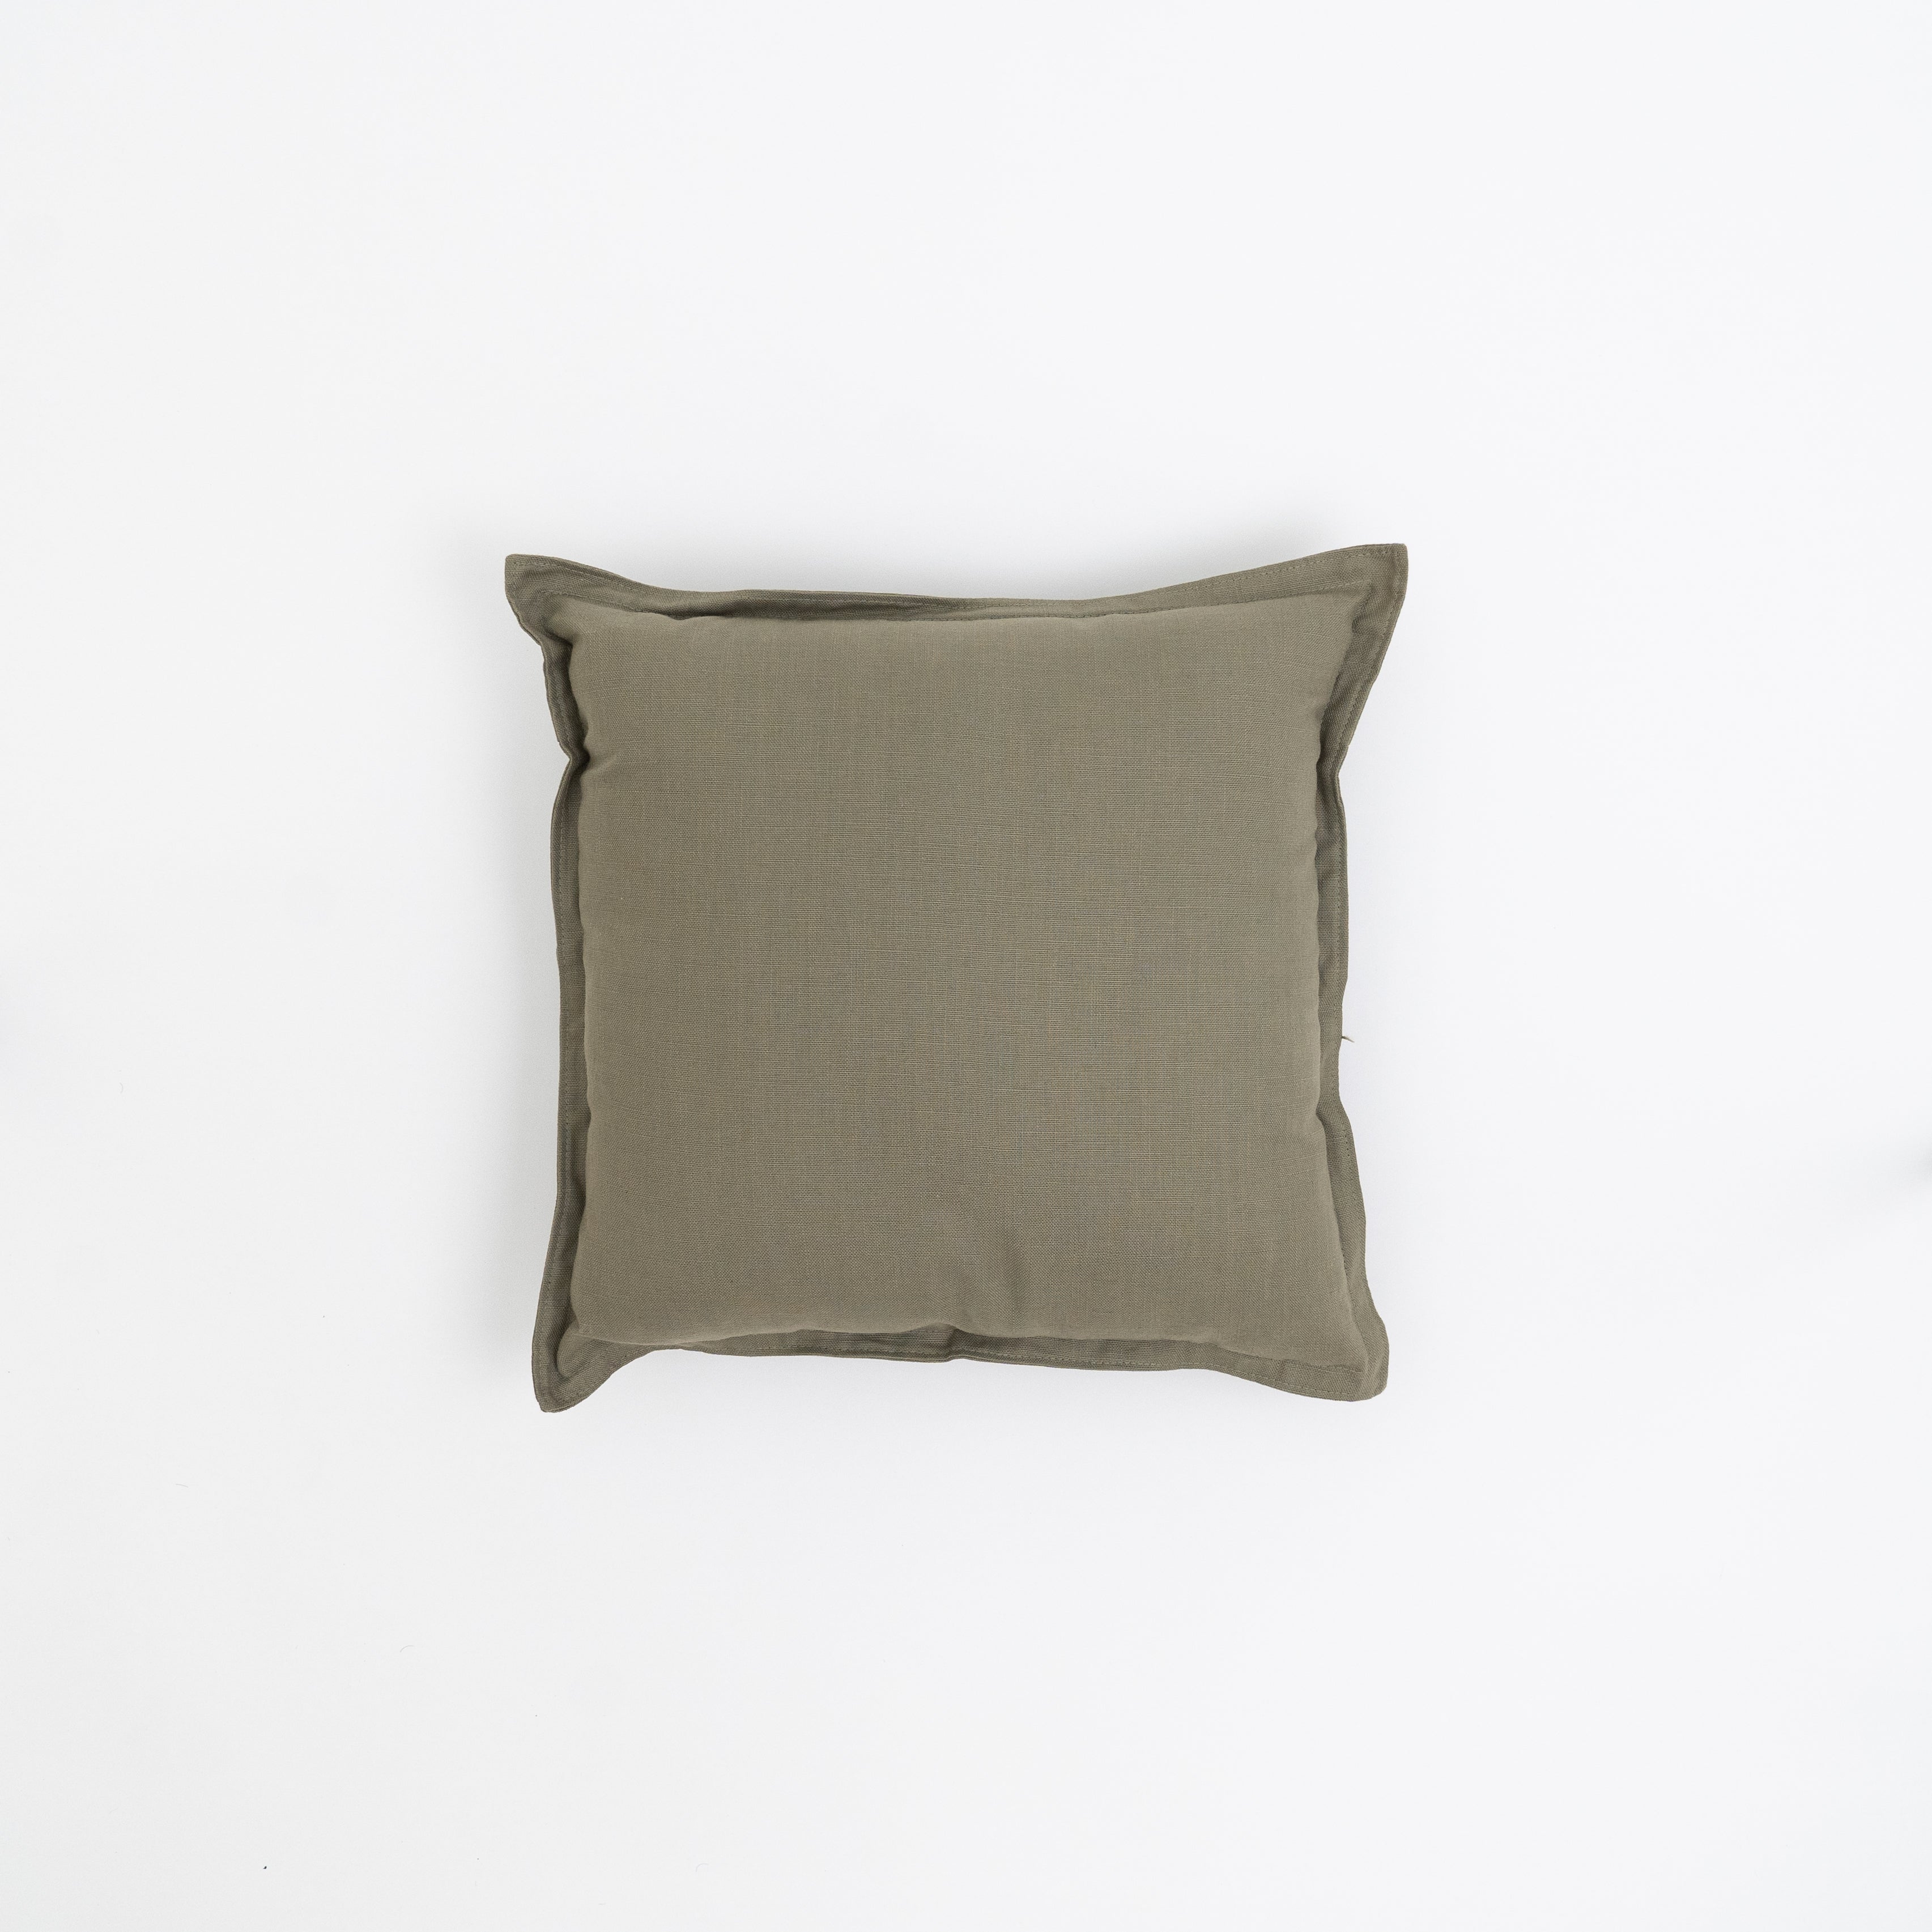 Cushion Cover Brown 45 x45cm  - WS Living - UAE - Cushions Wood and steel Furnitures - Dubai